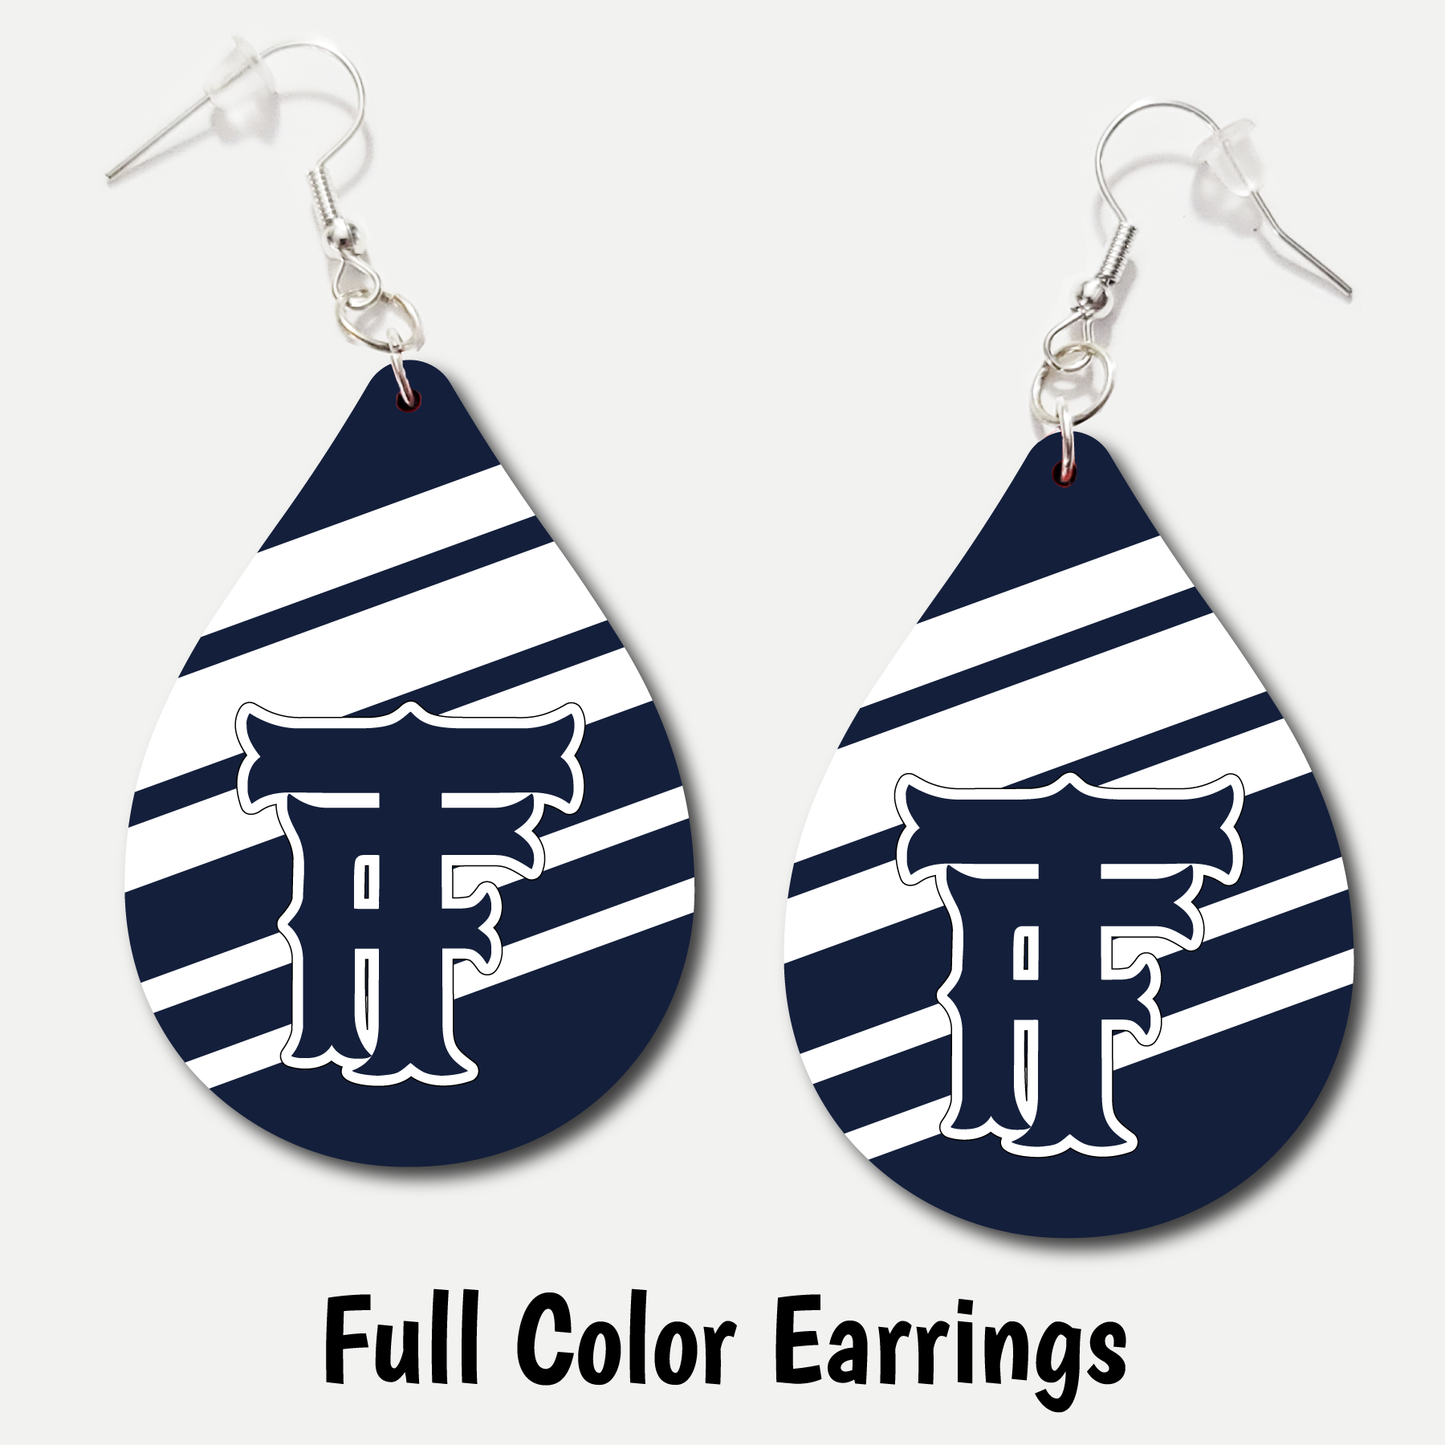 Twin Falls Bruins - Full Color Earrings